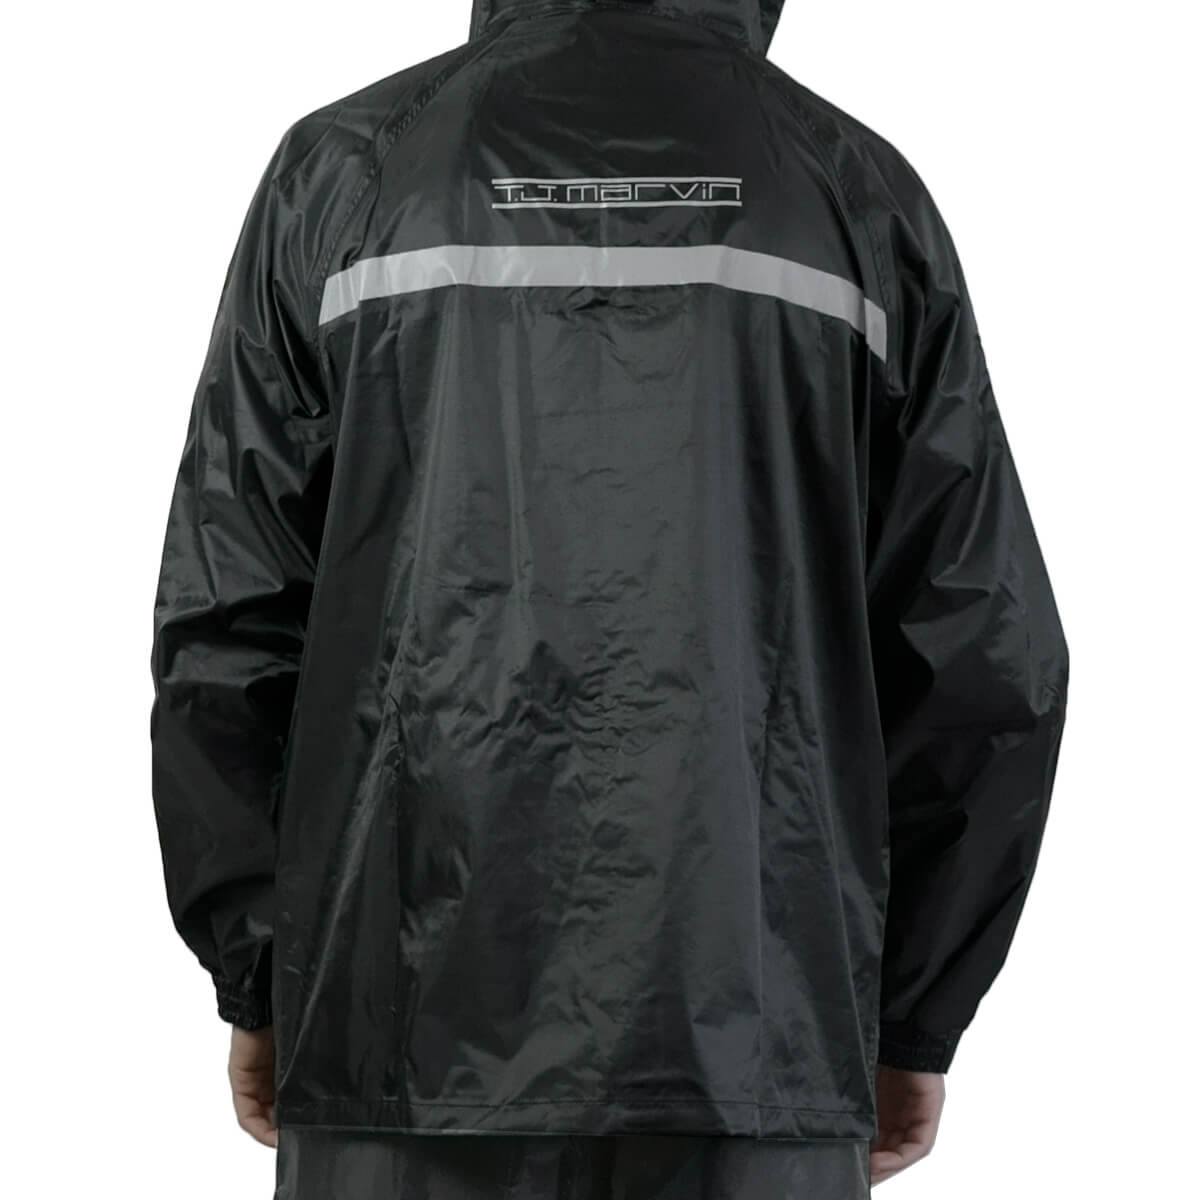 Waterproof Rainwear Set (Jacket + Pants)